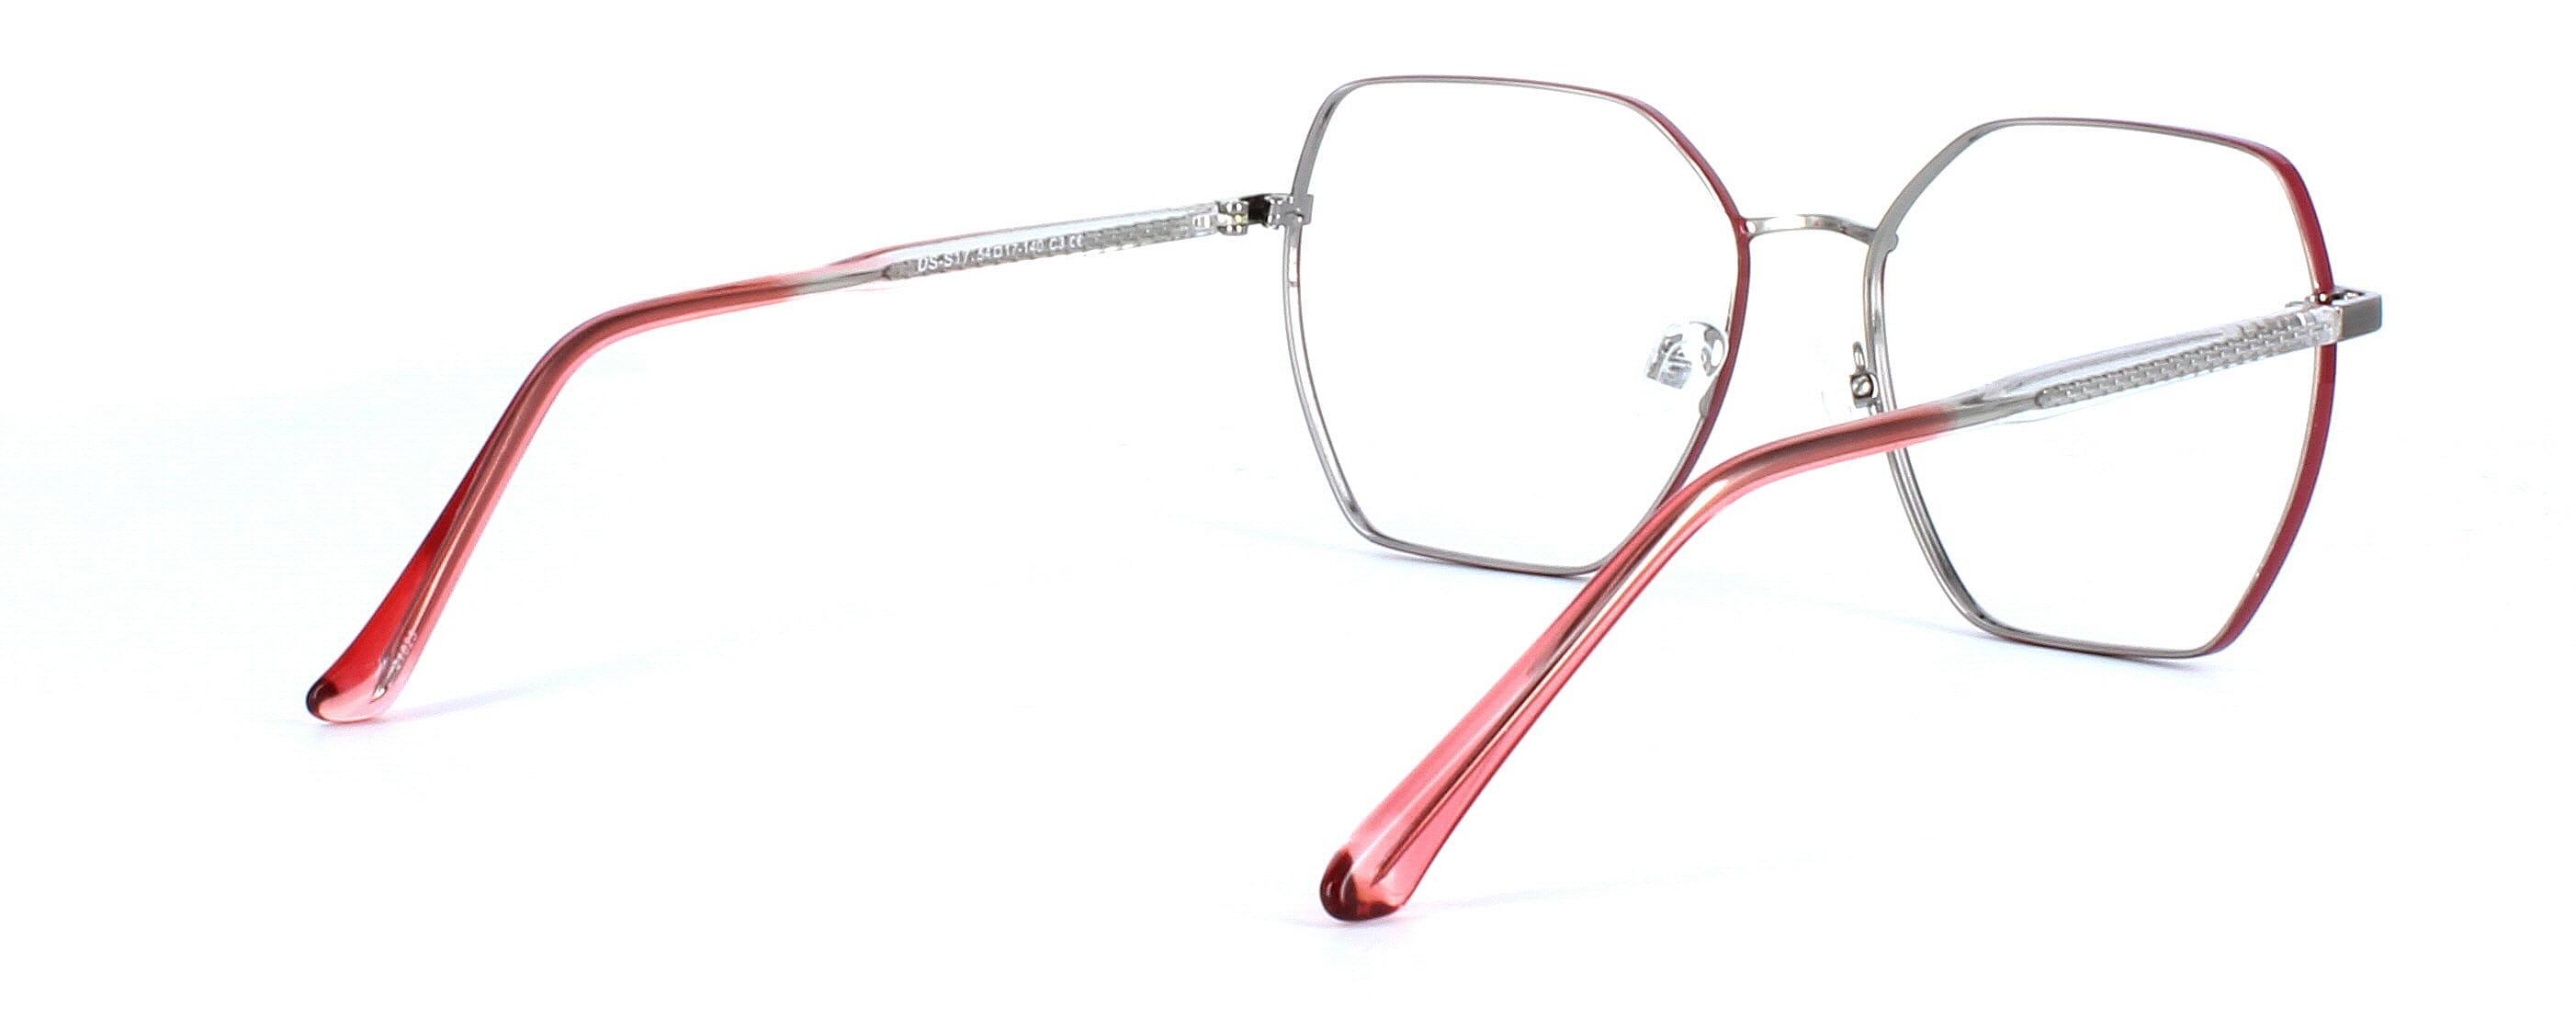 Grus - unisex 2-tone burgundy & silver glasses frame - image view 4